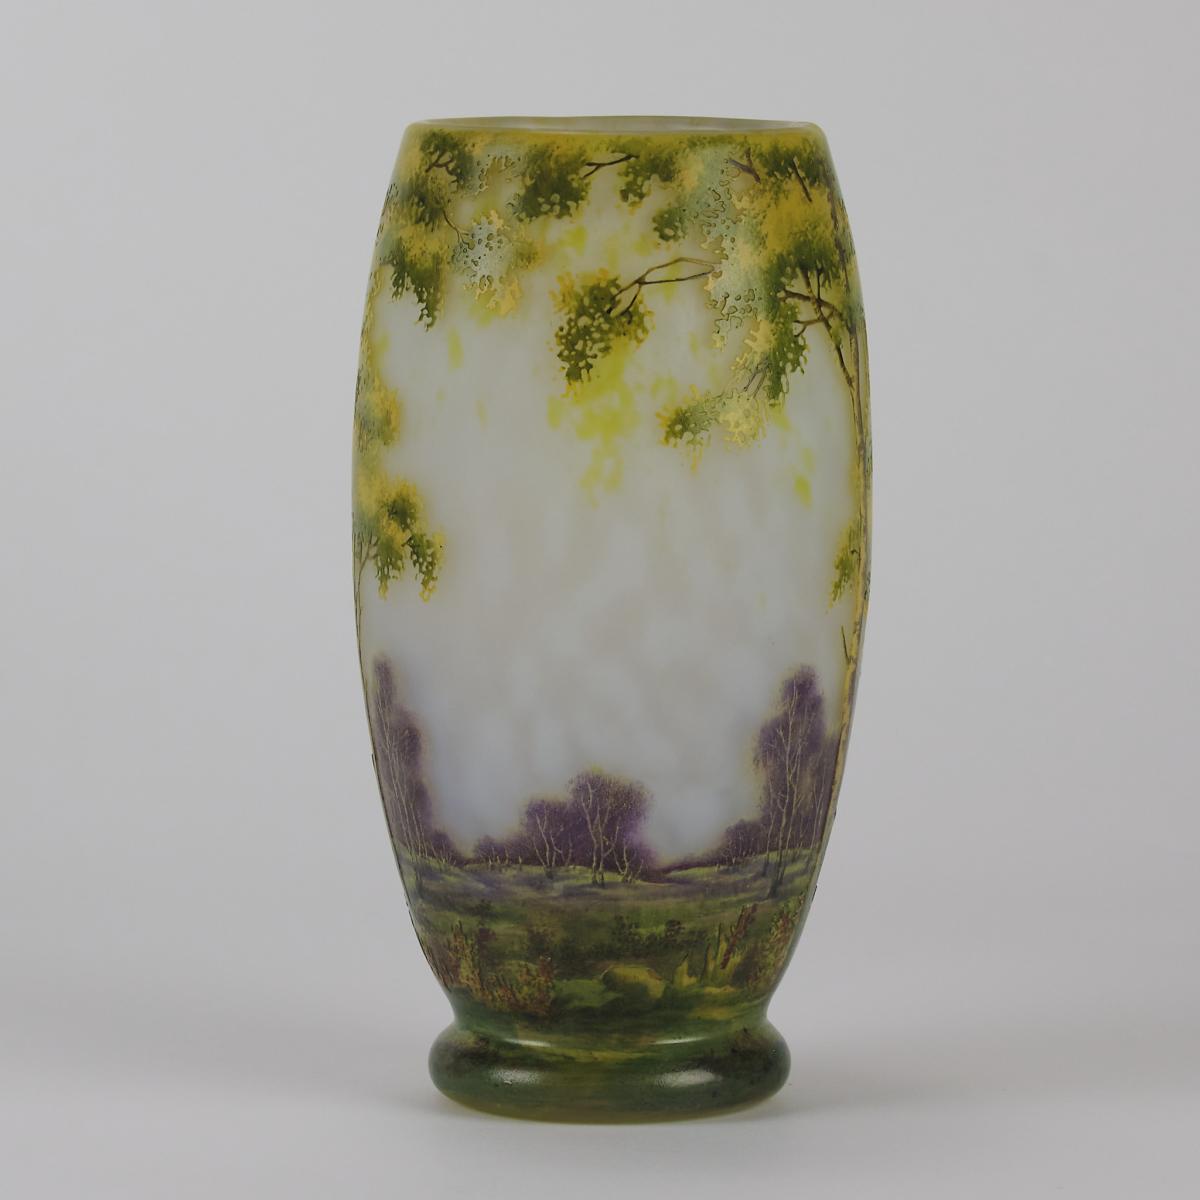 20th Century Cameo Glass Landscape Vase entitled "Summer Landscape" by Daum - Circa 1900